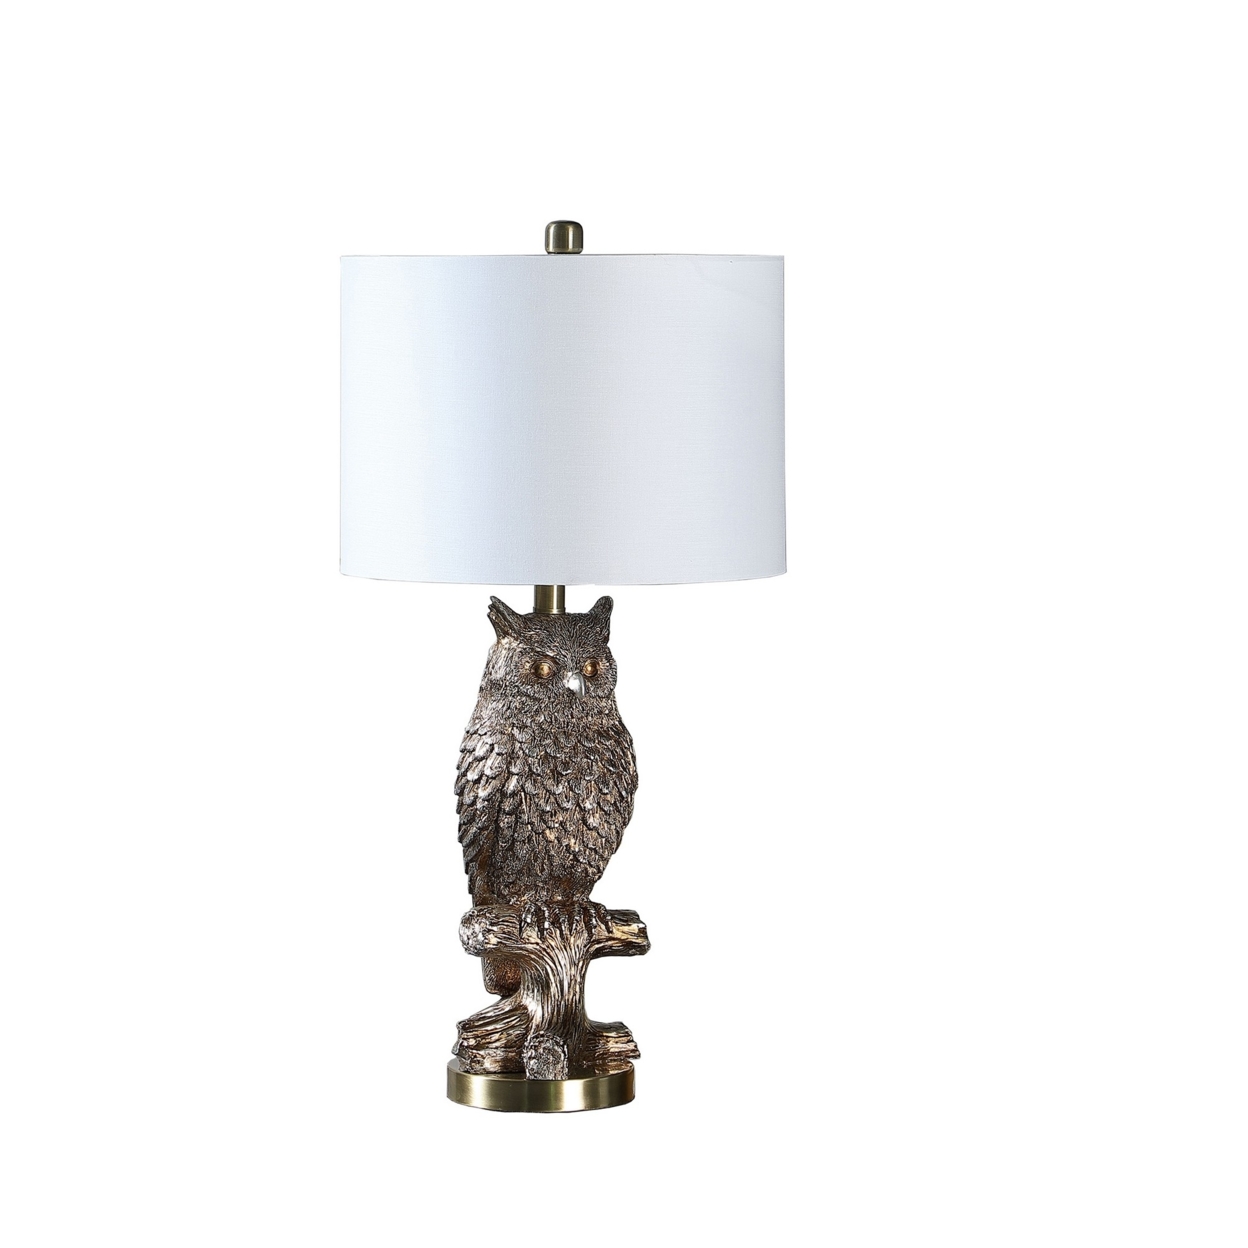 Polyresin Sitting Owl Design Table Lamp With Round Base, Silver- Saltoro Sherpi